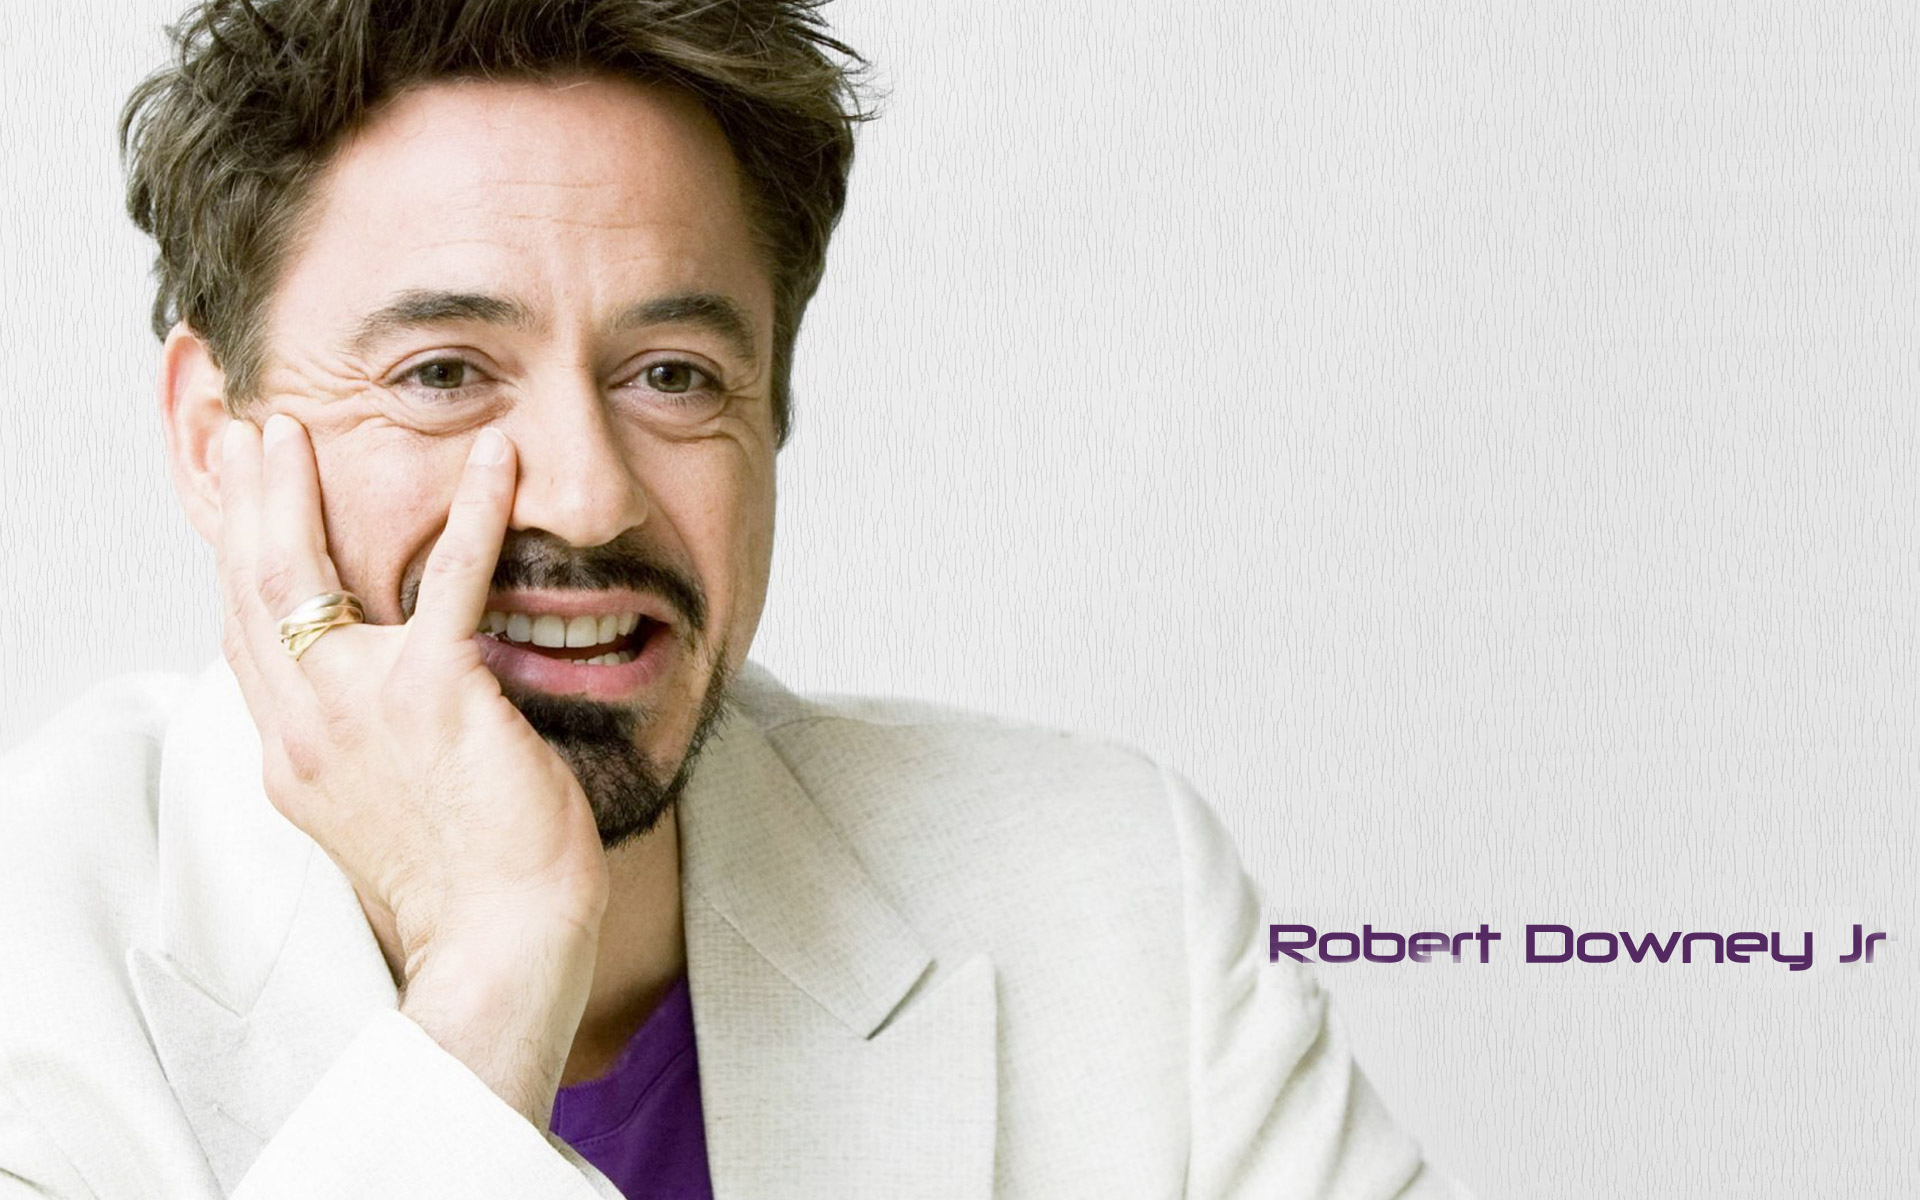 Robert Downey Jr Wallpaper High Resolution And Quality